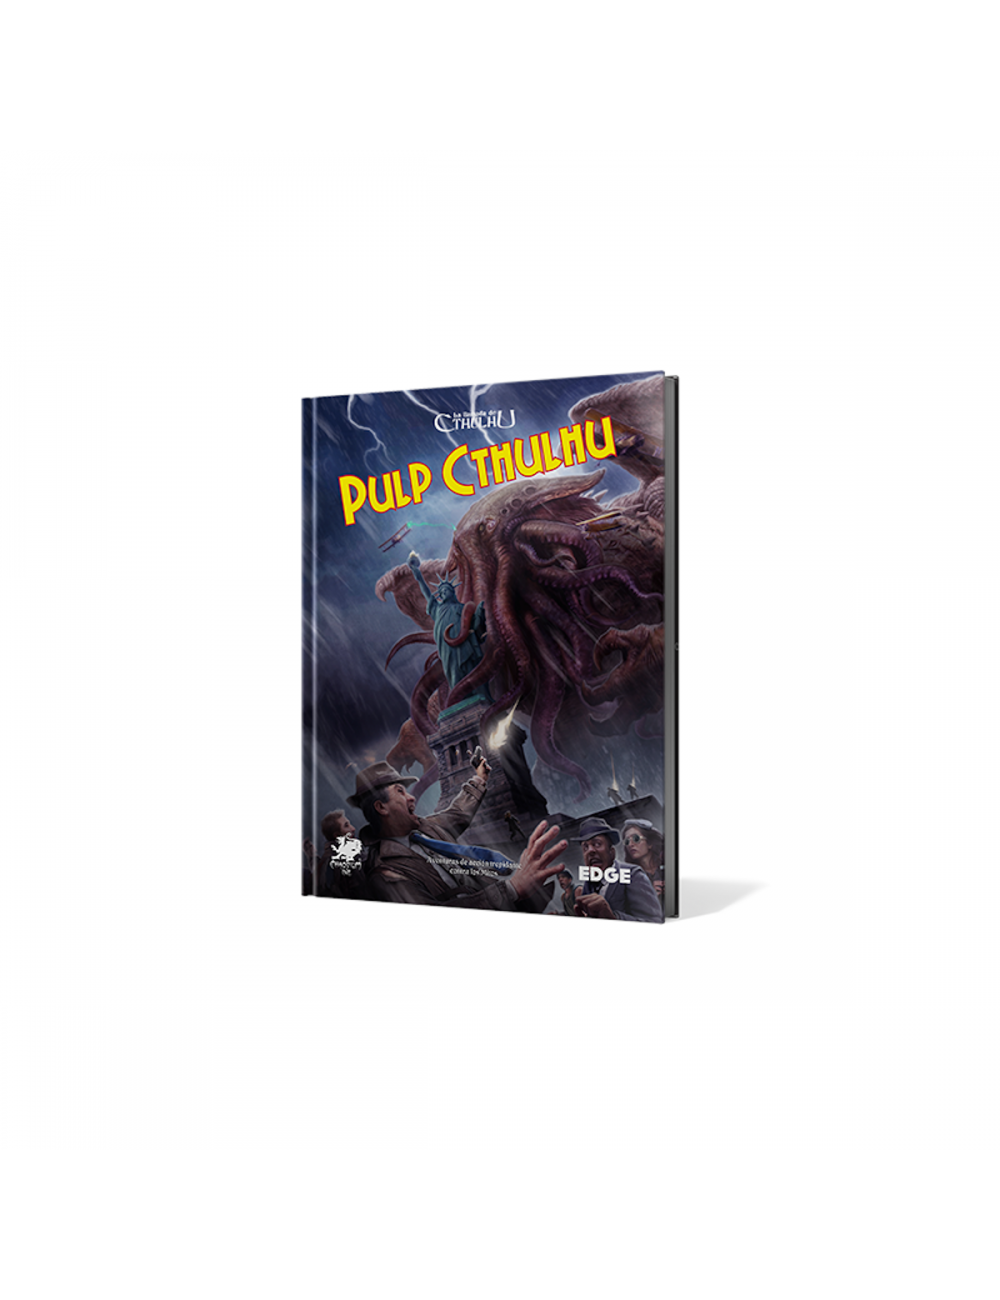 La Llamada de Cthulhu: Pulp Cthulhu CHK-EECHCT068 Edge Entertainment Edge Entertainment